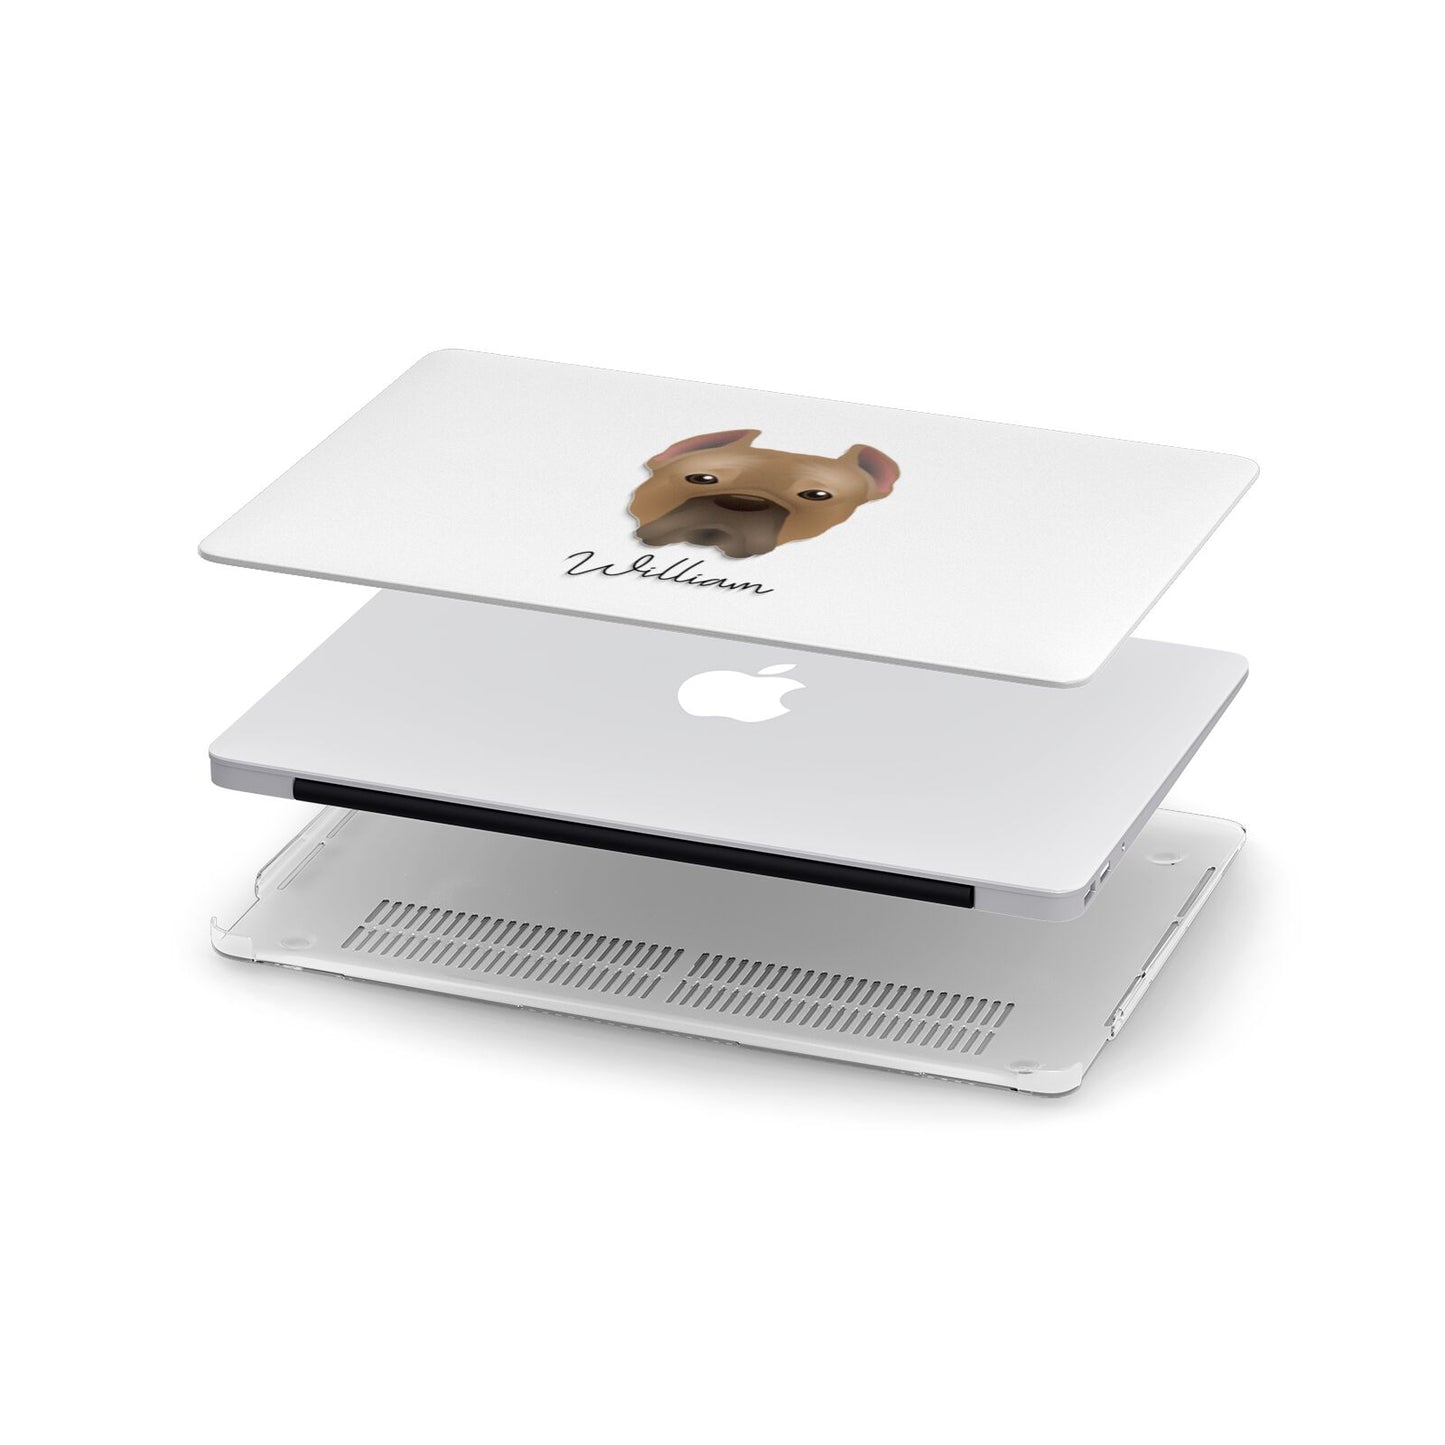 Cane Corso Italiano Personalised Apple MacBook Case in Detail